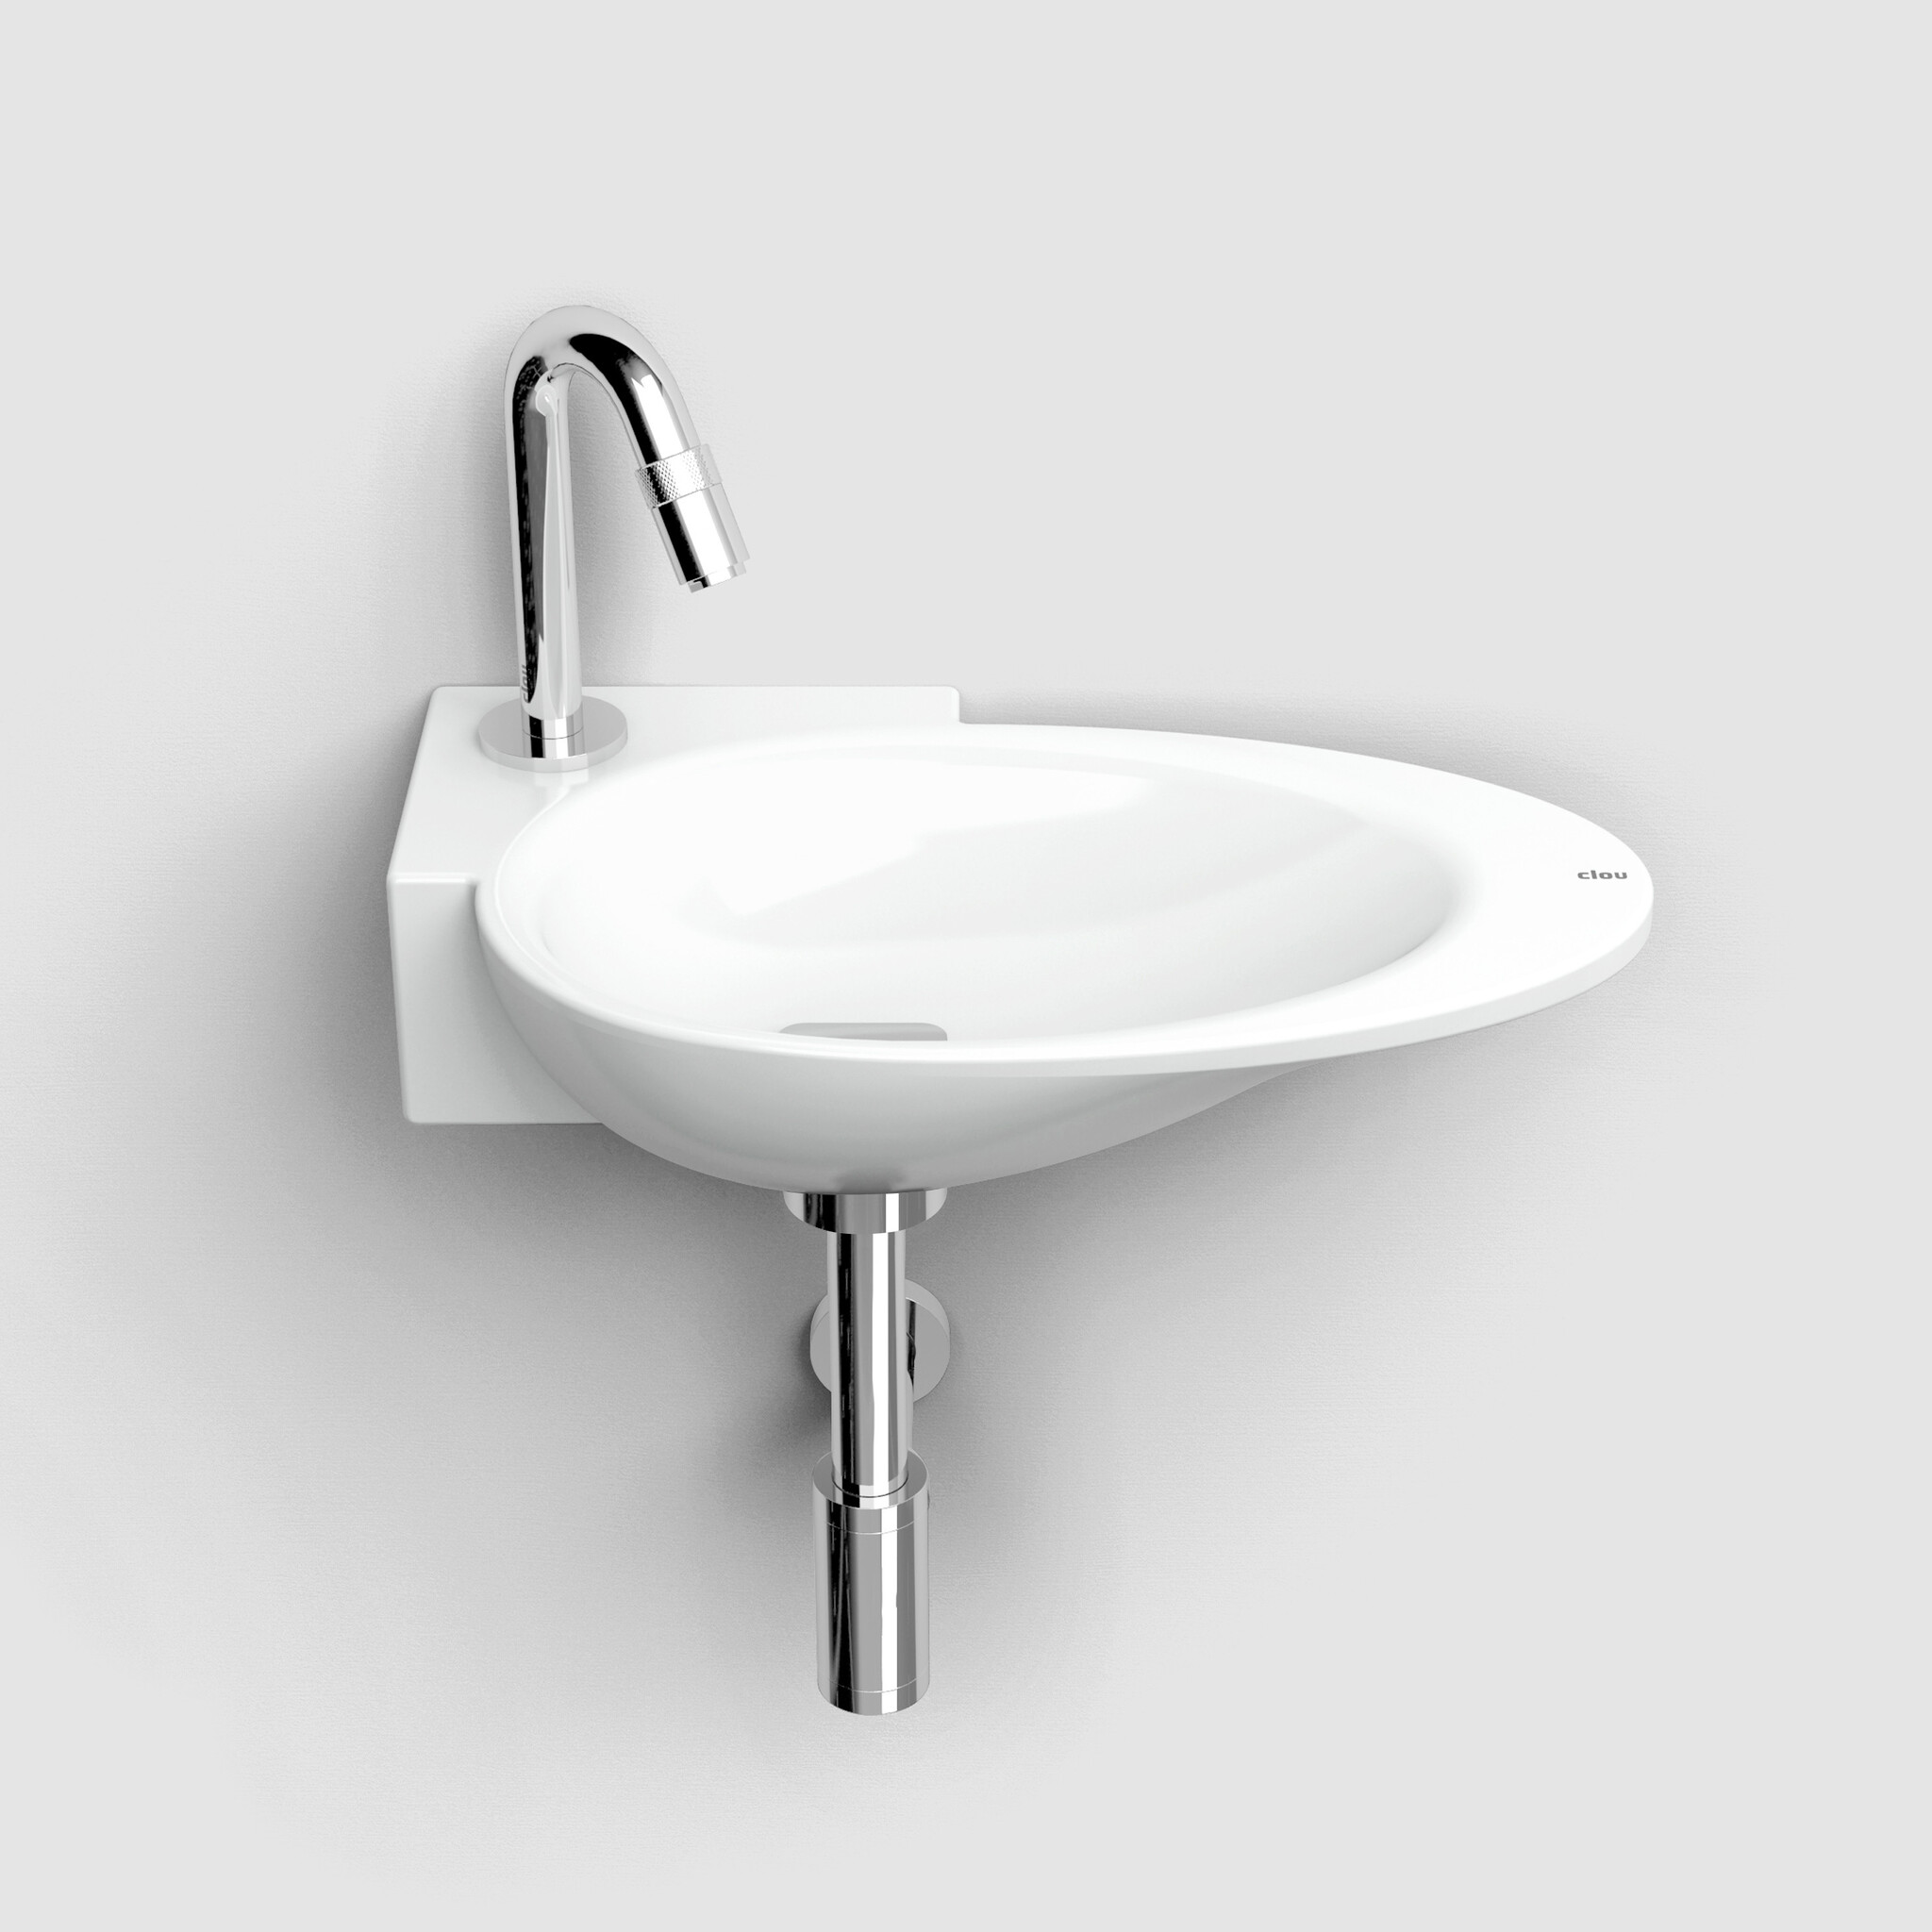 One-Click One-Click handbasin set (First handbasin, Freddo tap and MiniSuk siphon)